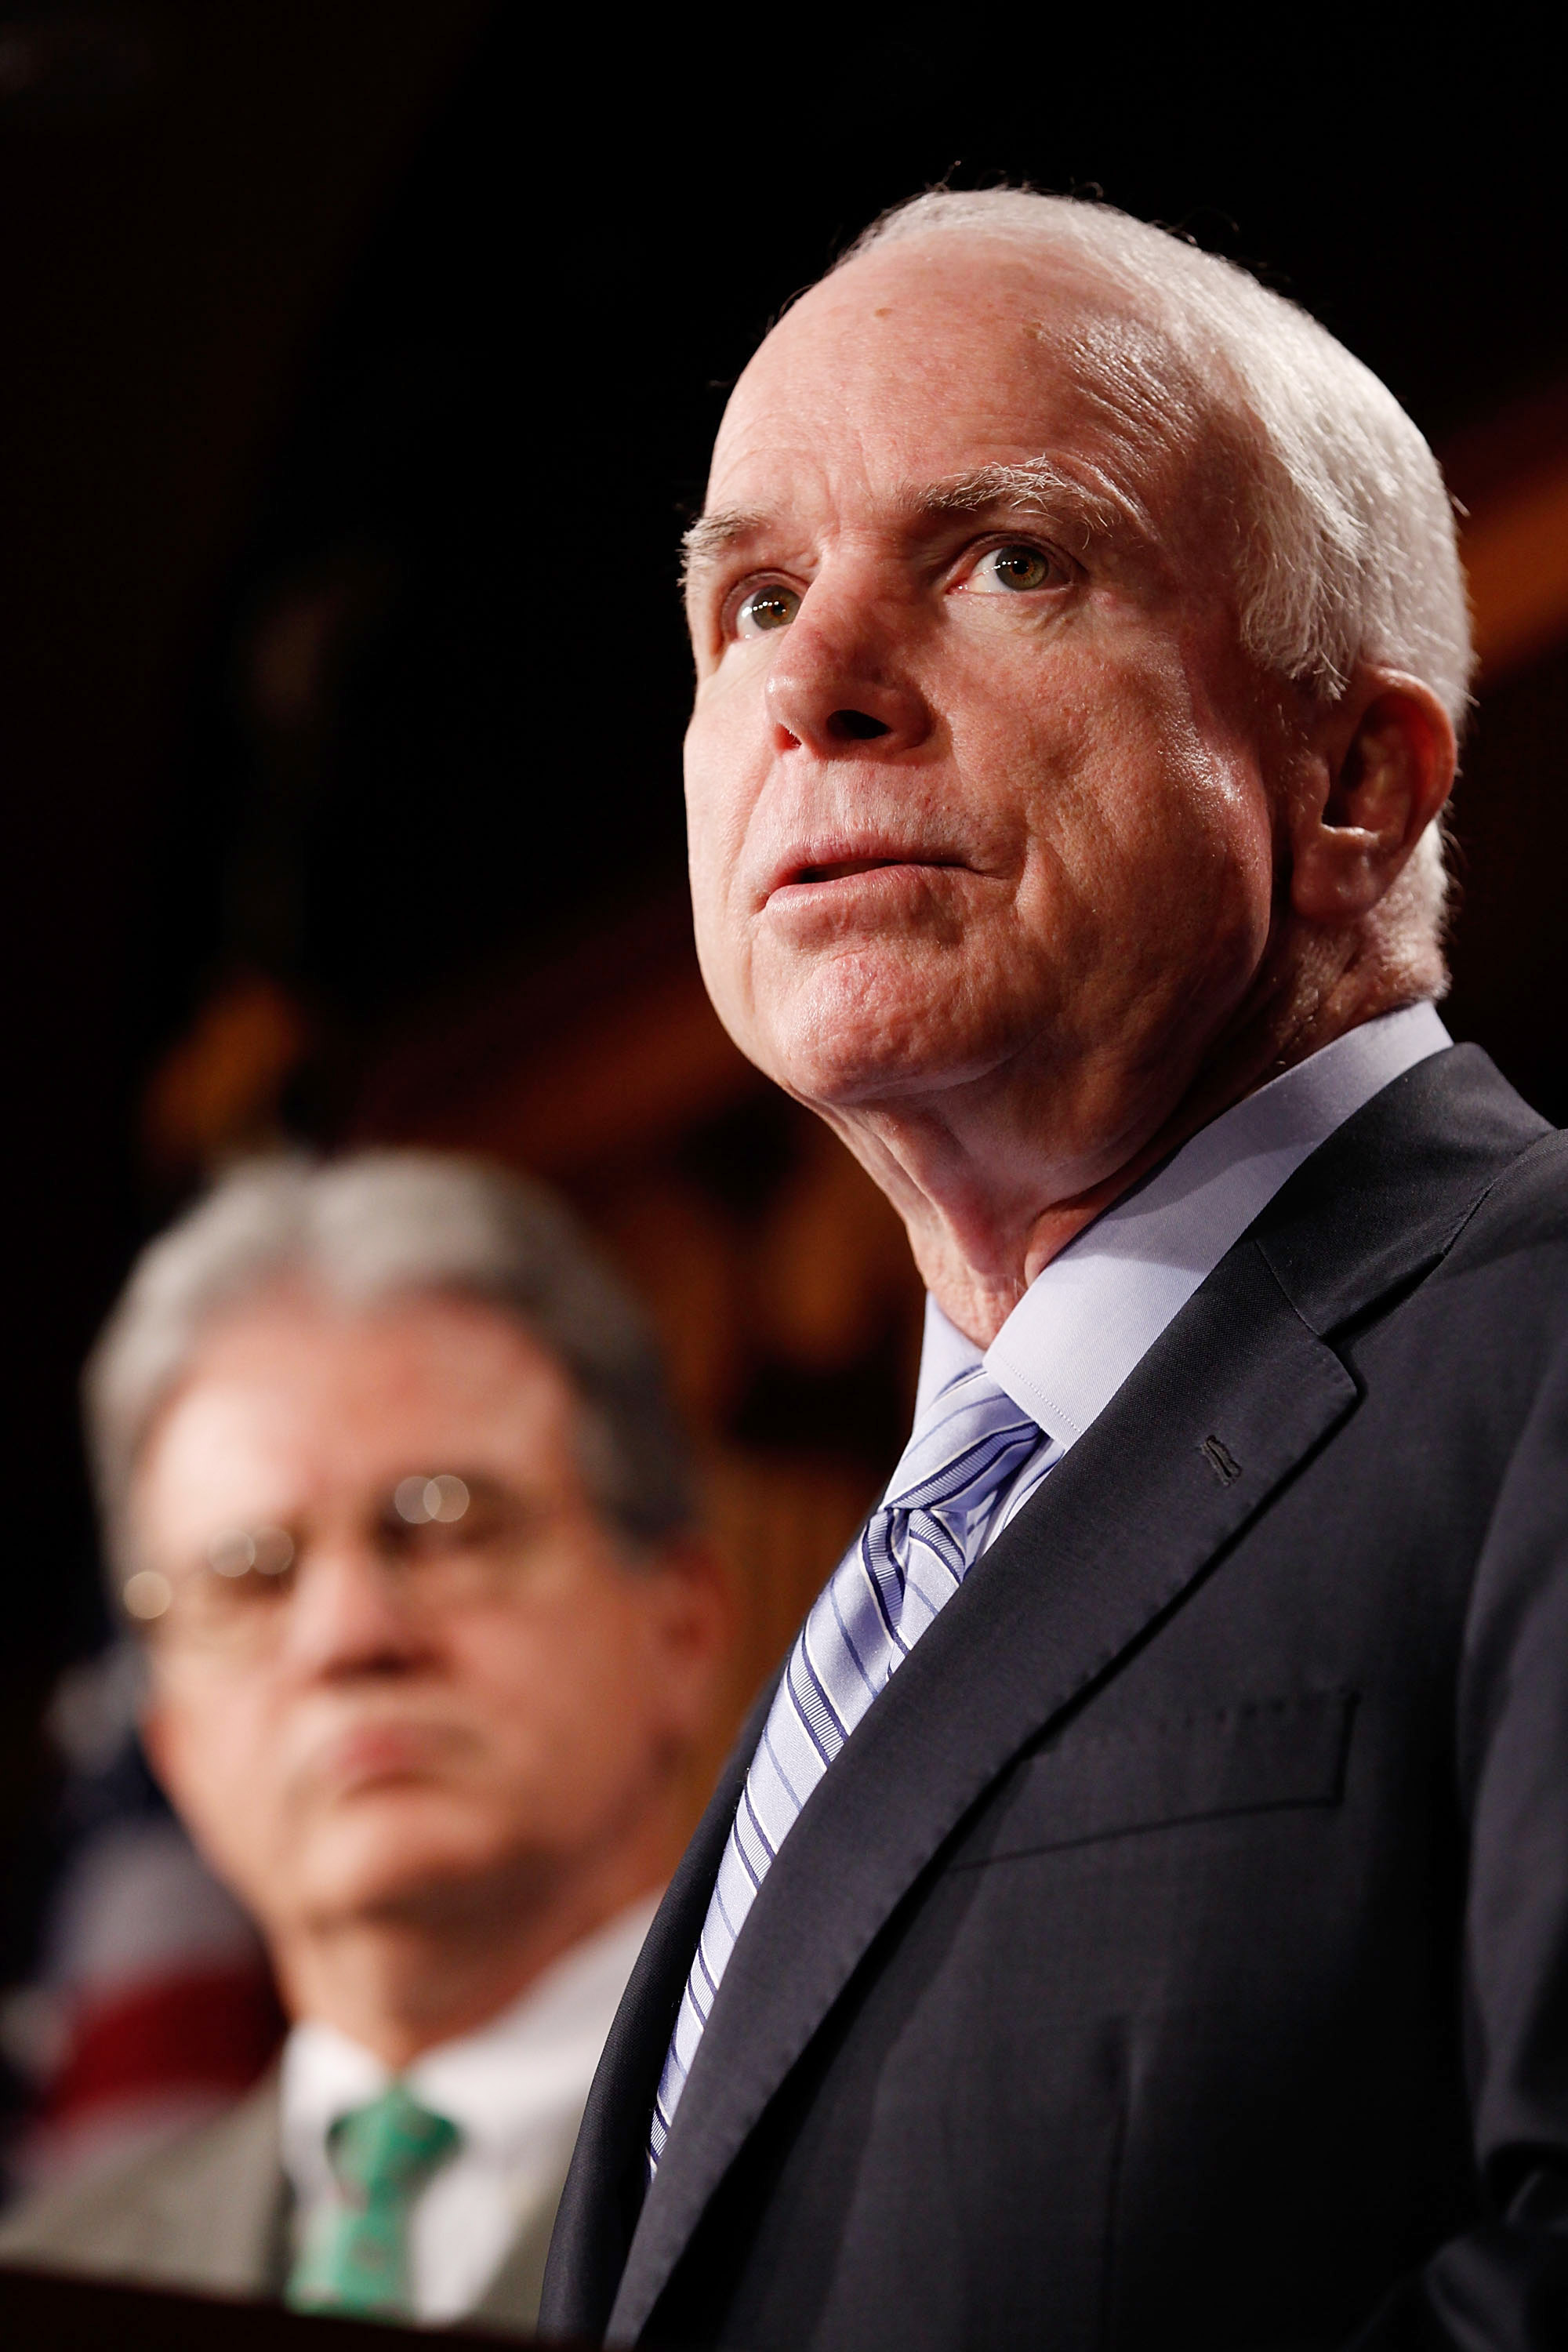 John McCain (R) - Senior Senator from Arizona 